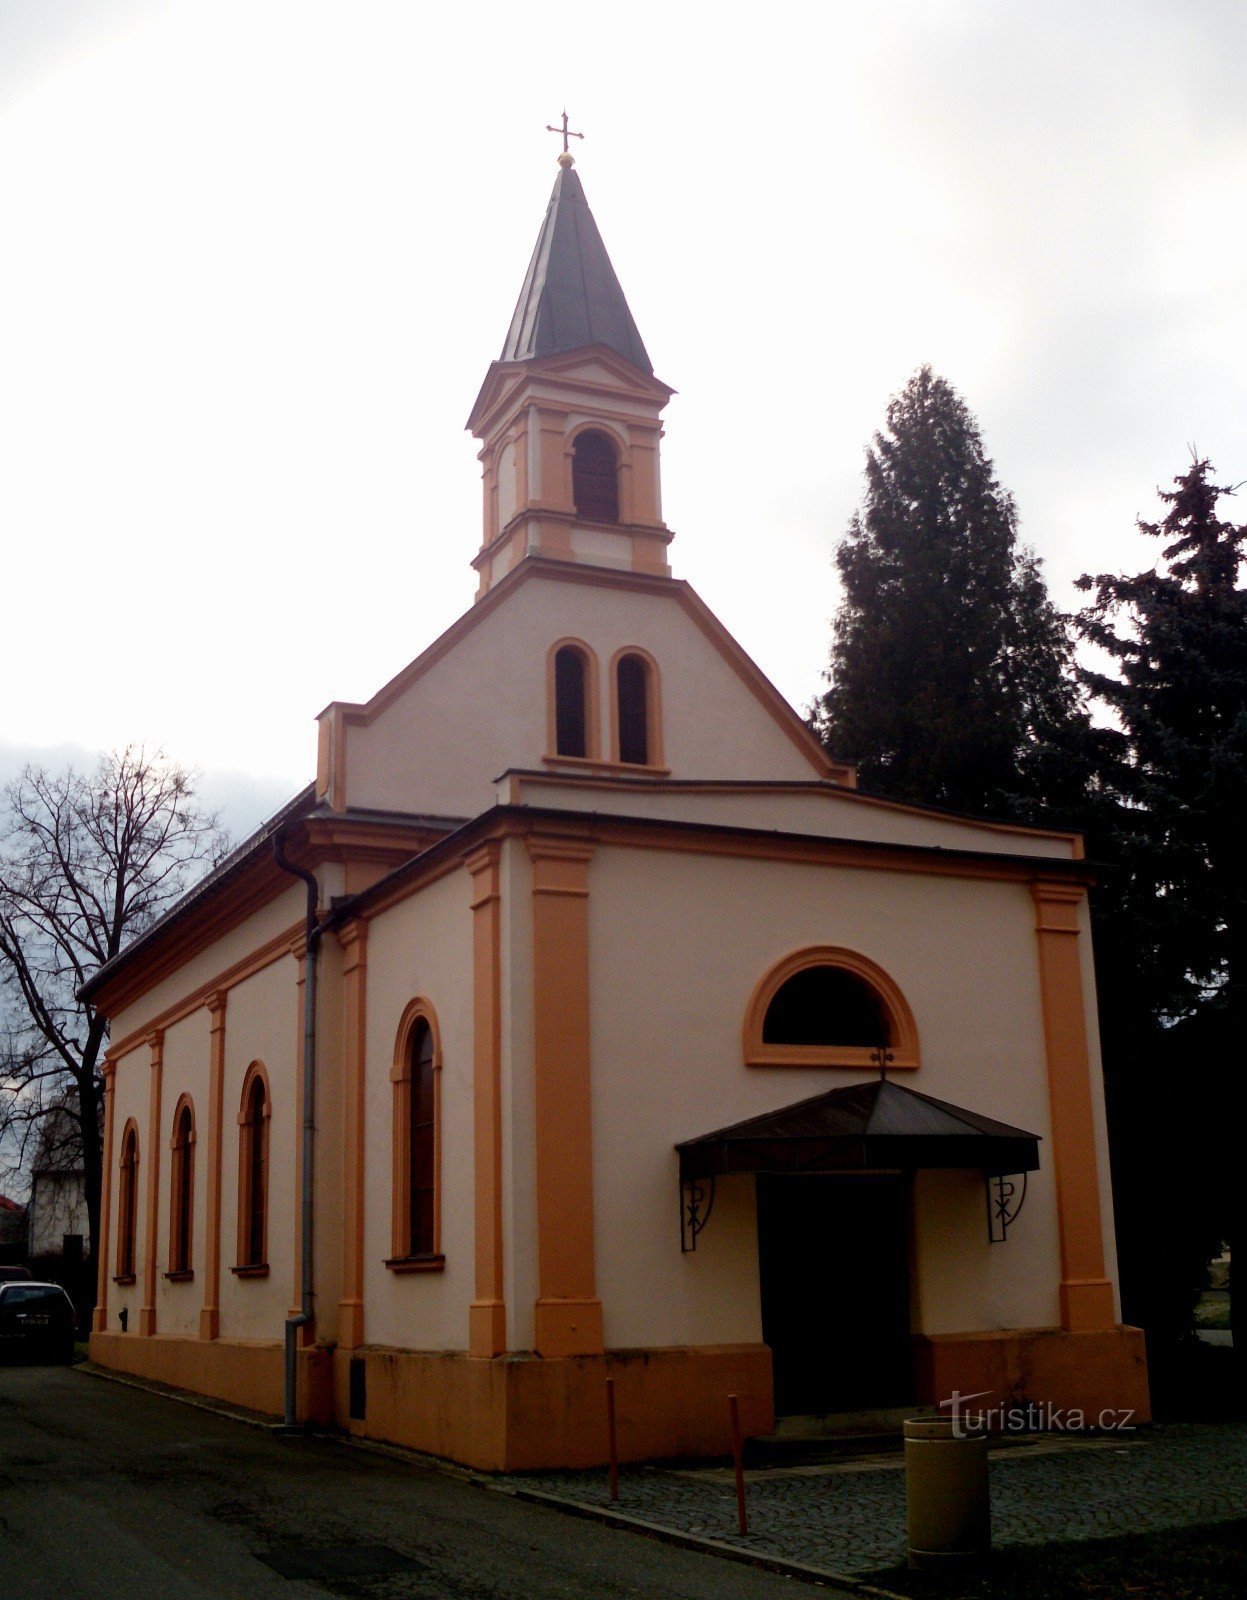 Otrokovice - Kvítkovice - church of St. Anne